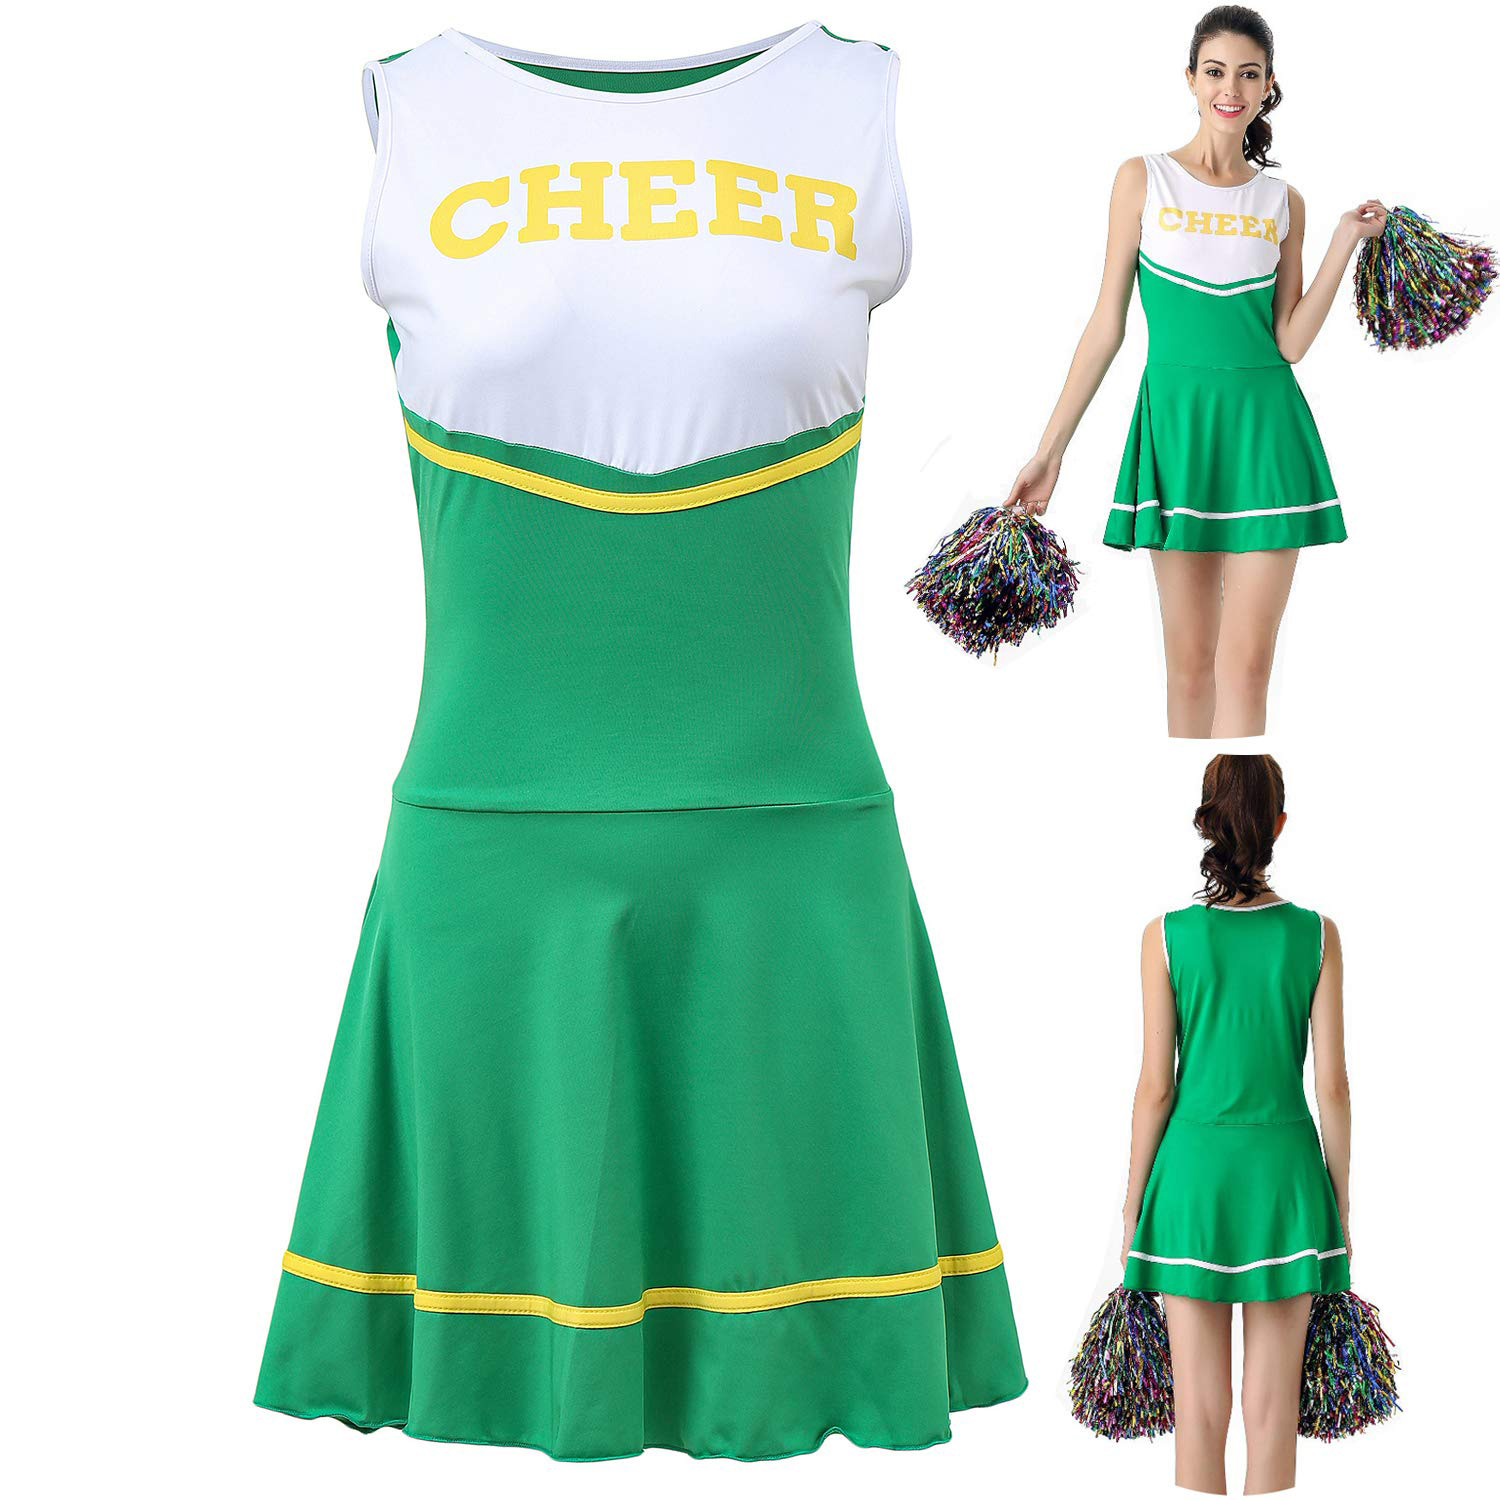 Costume de pom-pom girl vert déguisement lycée musical uniforme de pom-pom girl sans pompon